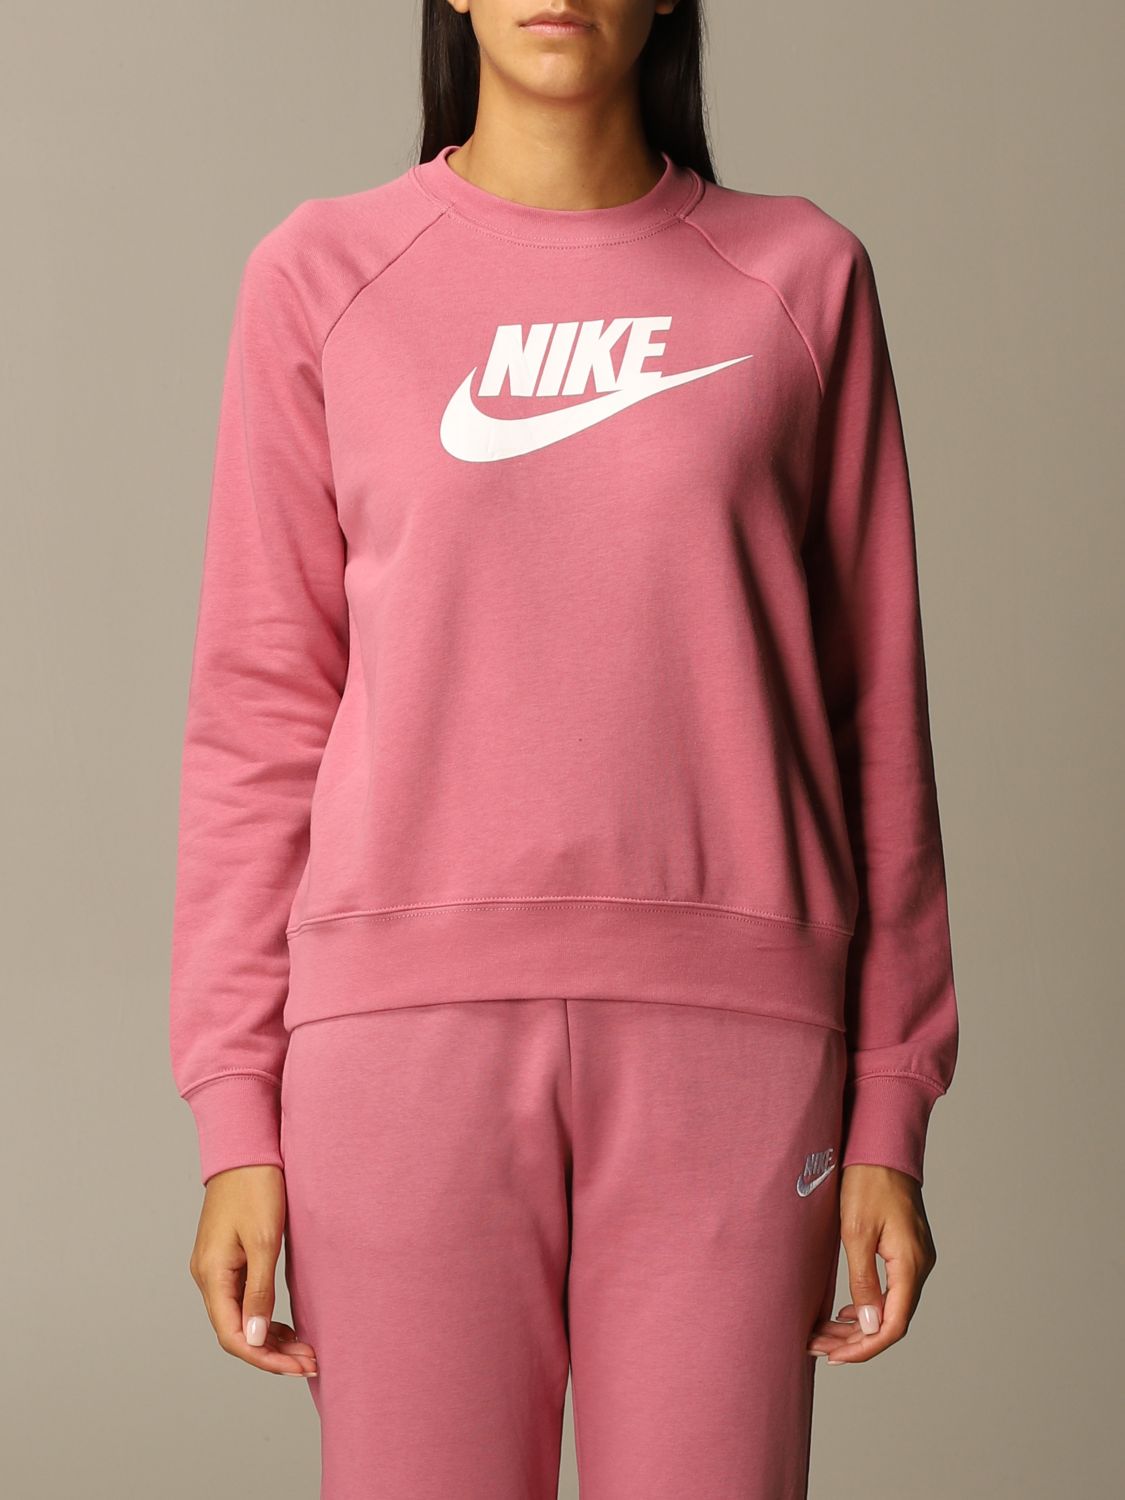 womens nike pink sweatshirt